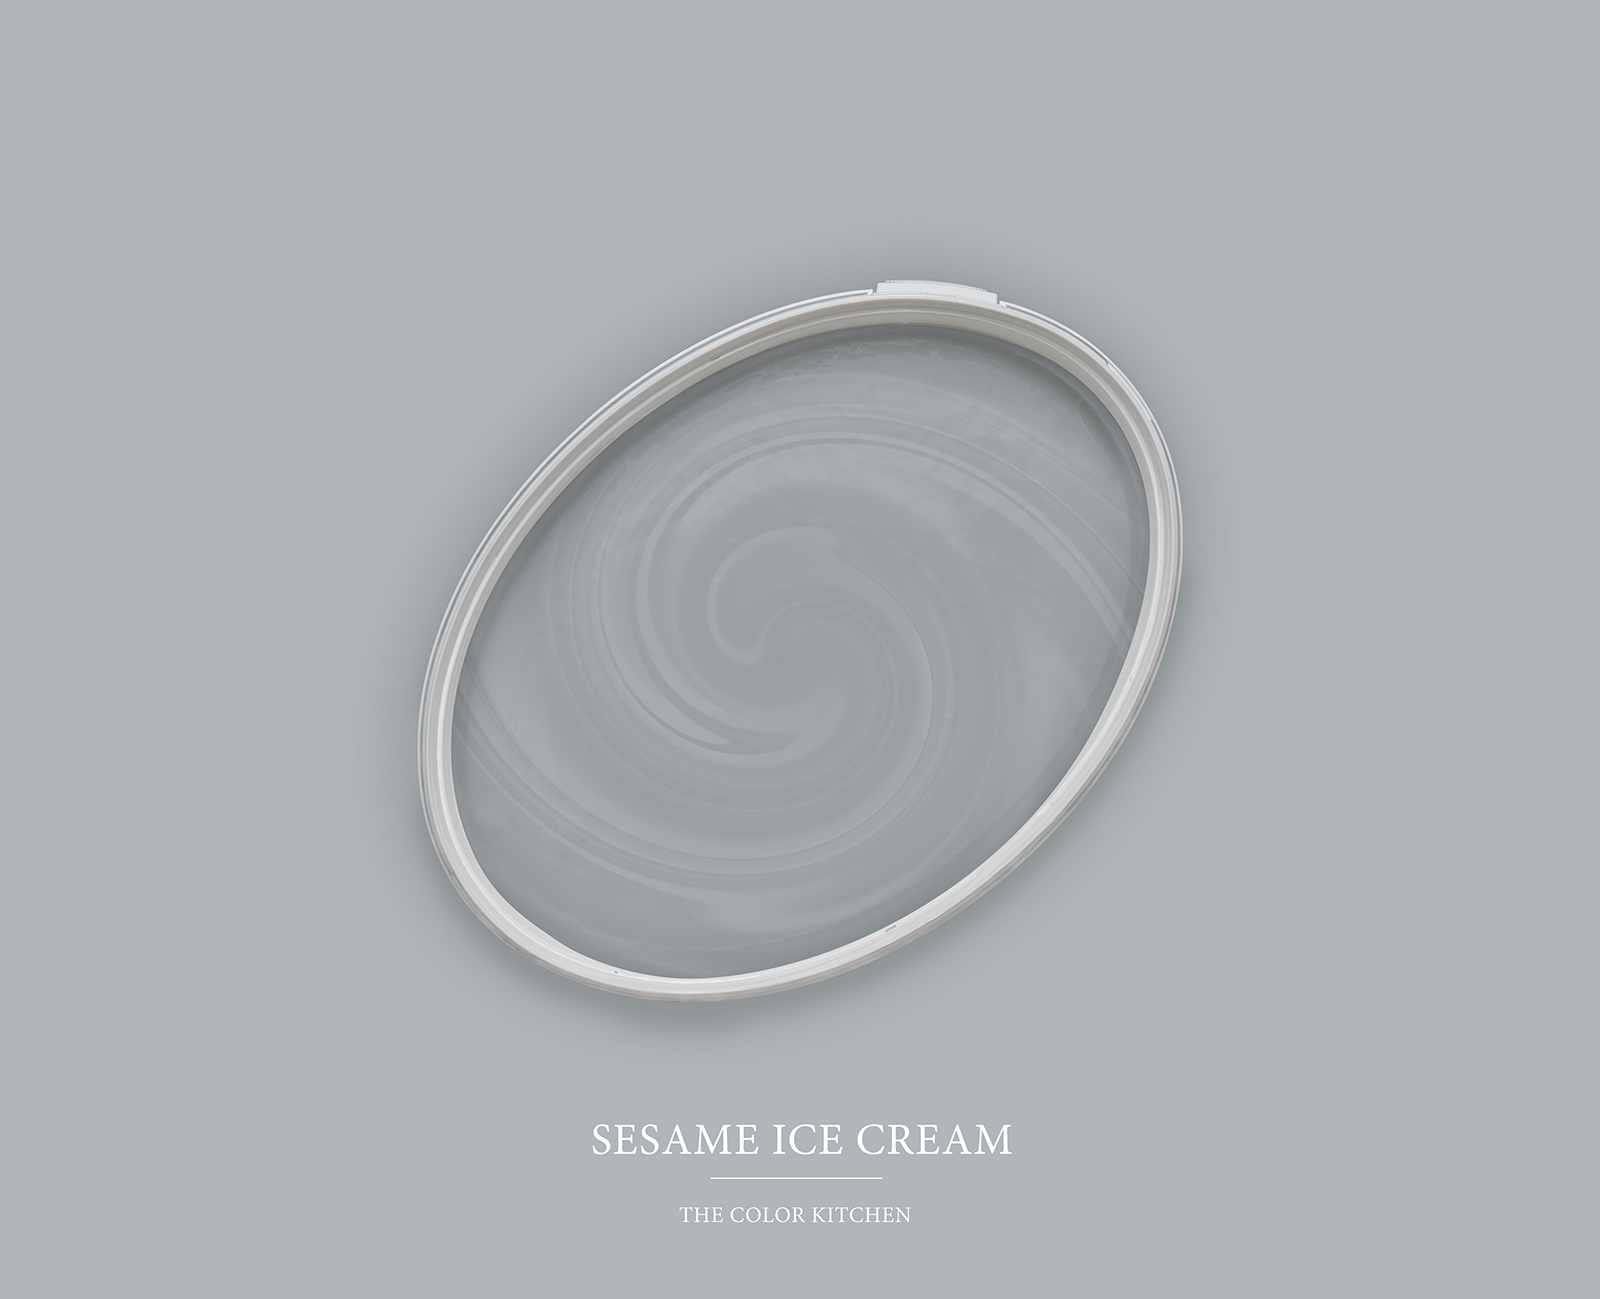         Wandfarbe in bläulichem Hellgrau »Sesame Ice Cream« TCK1005 – 2,5 Liter
    